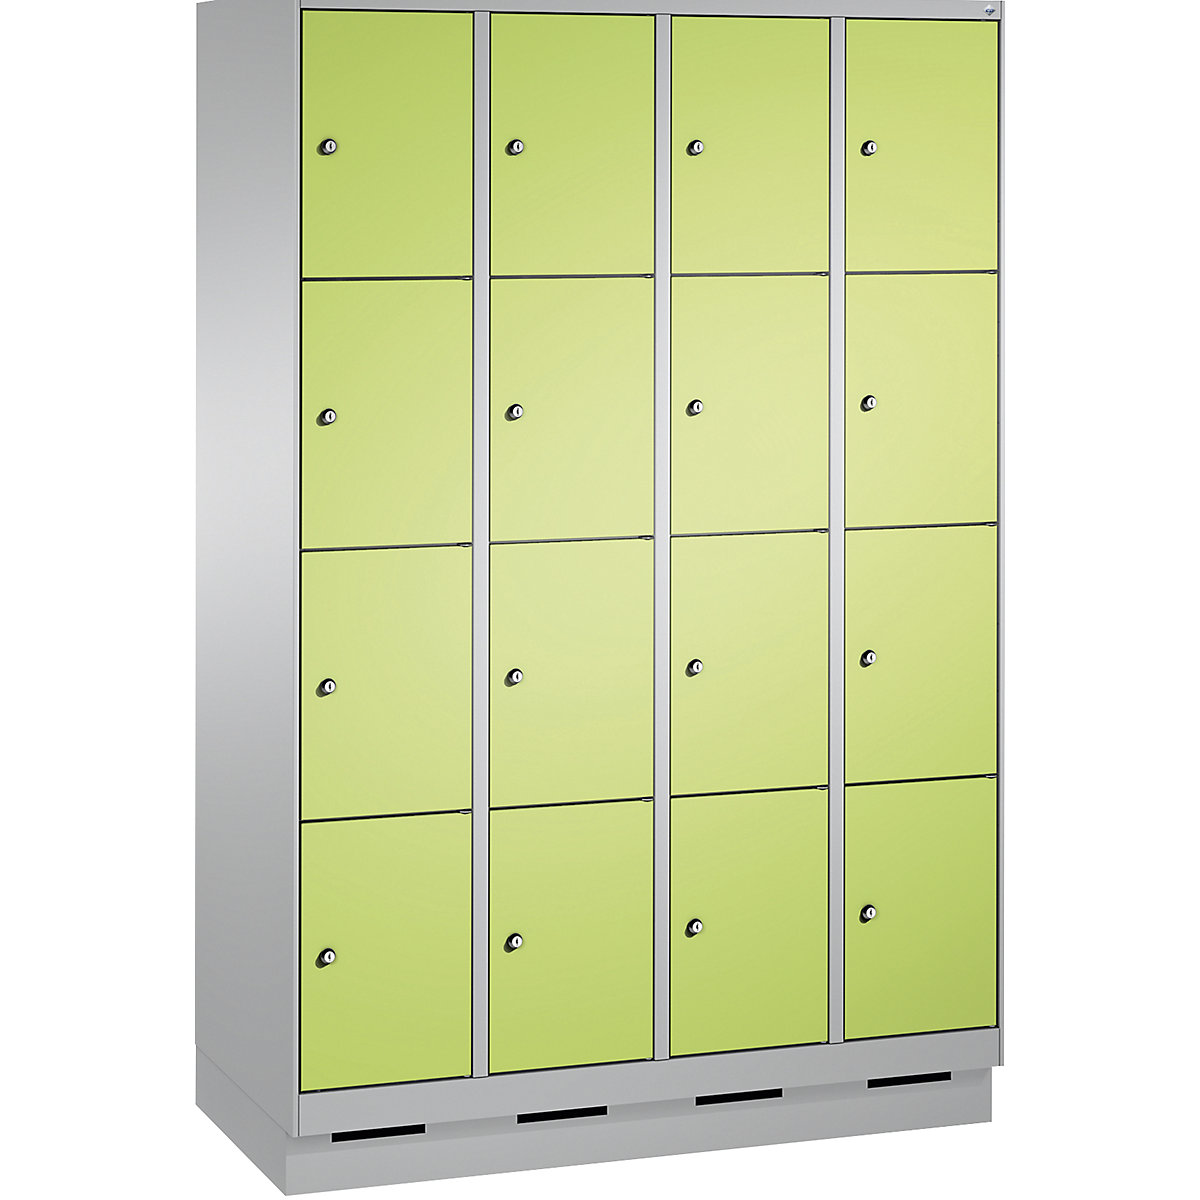 EVOLO locker unit, with plinth – C+P, 4 compartments, 4 shelf compartments each, compartment width 300 mm, white aluminium / viridian green